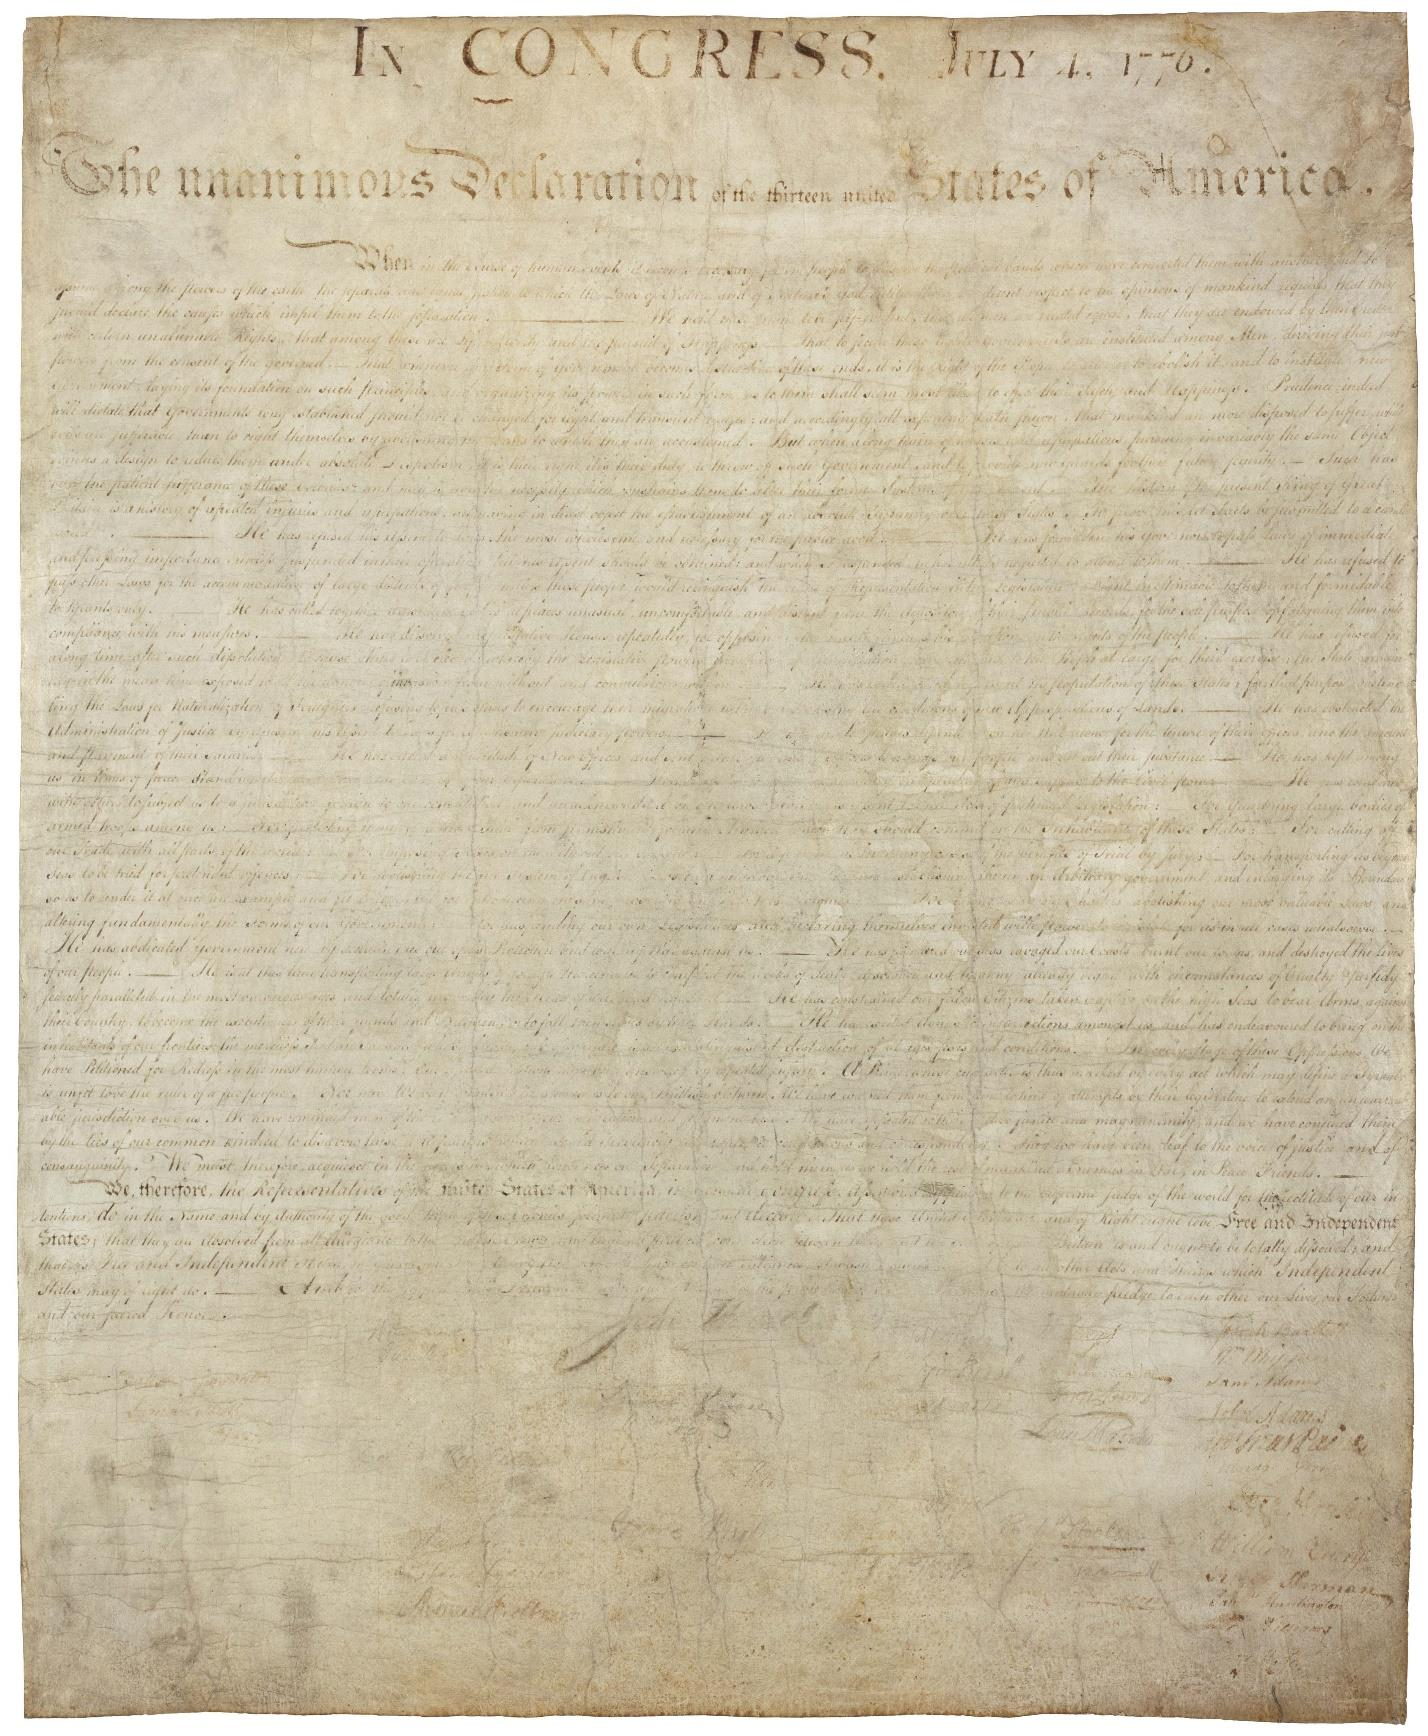 2 Podepsaná a na pergamenu vyhotovená Deklarace nezávislosti.